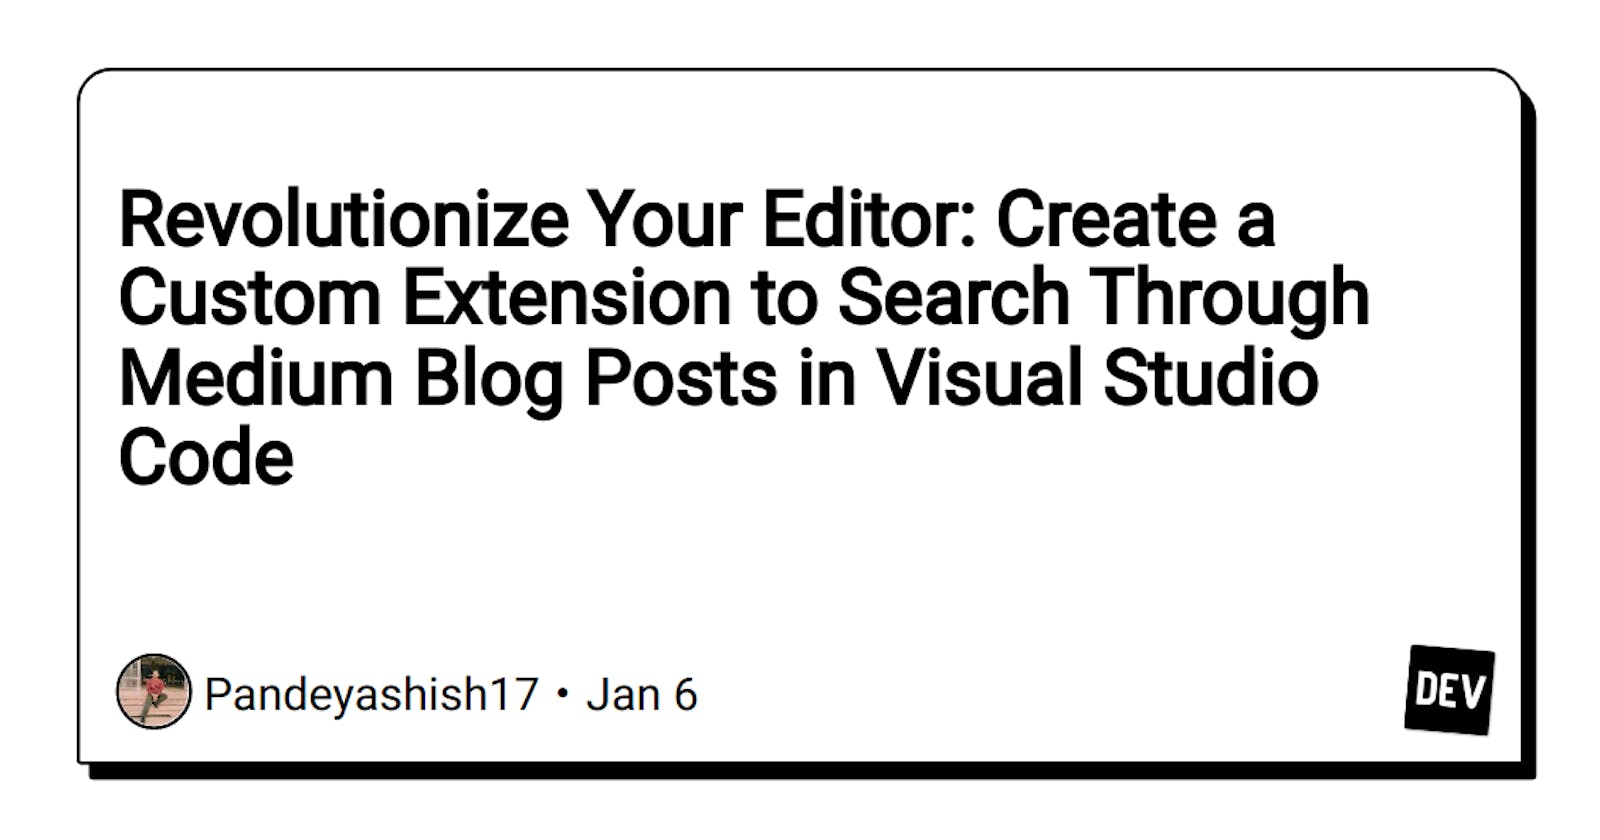 Revolutionize Your Editor: Create a Custom Extension to Search Through Medium Blog Posts in Visual Studio Code